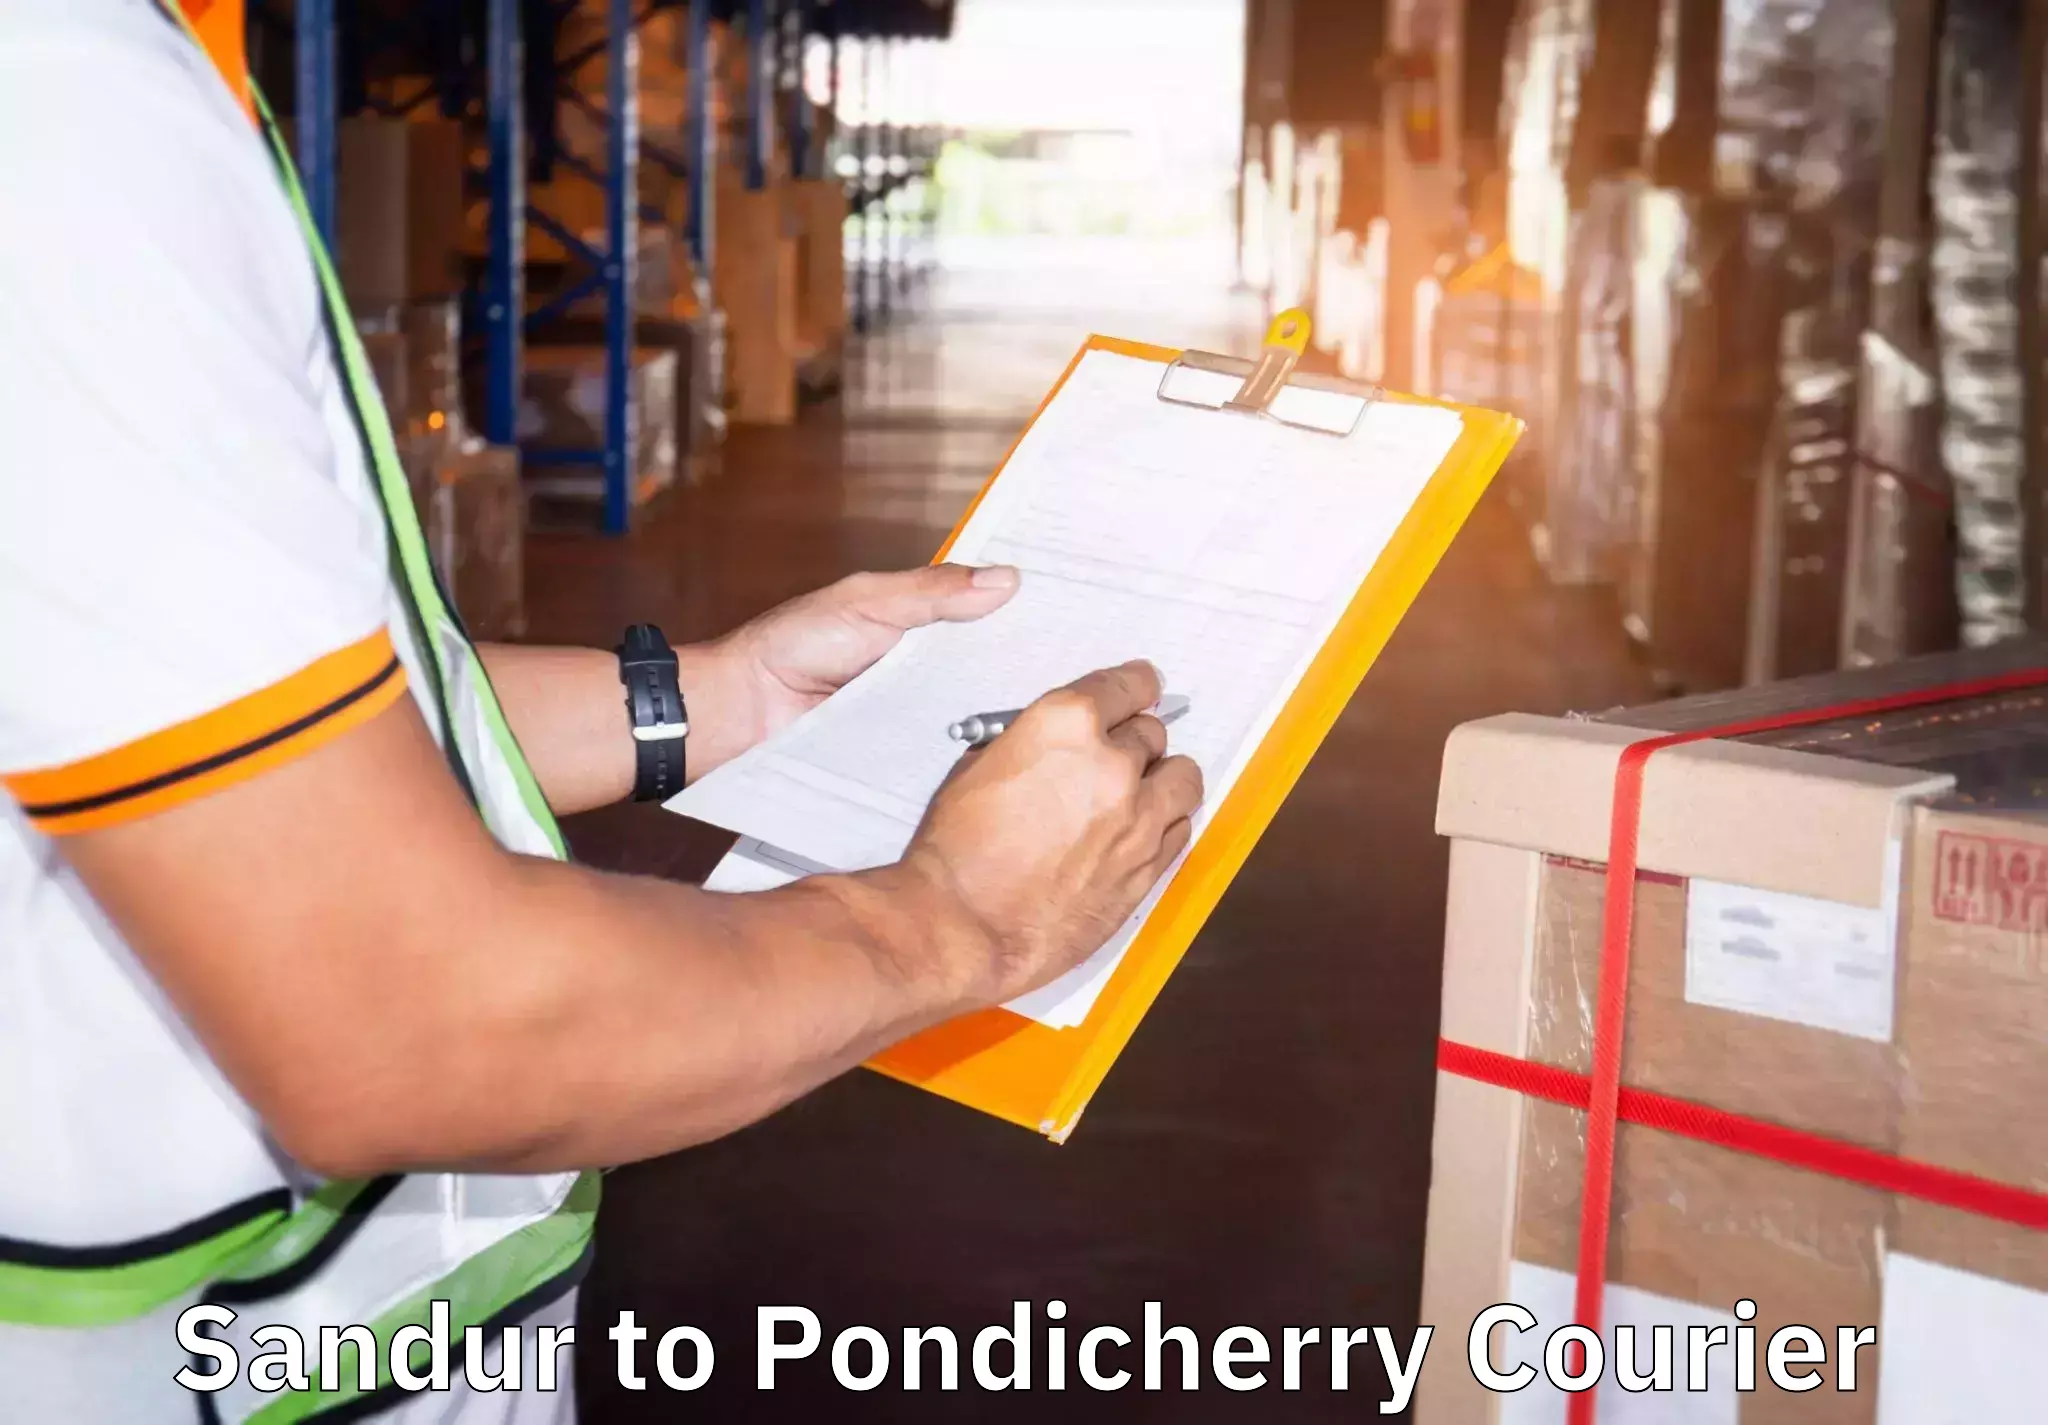 Quality moving company Sandur to Pondicherry